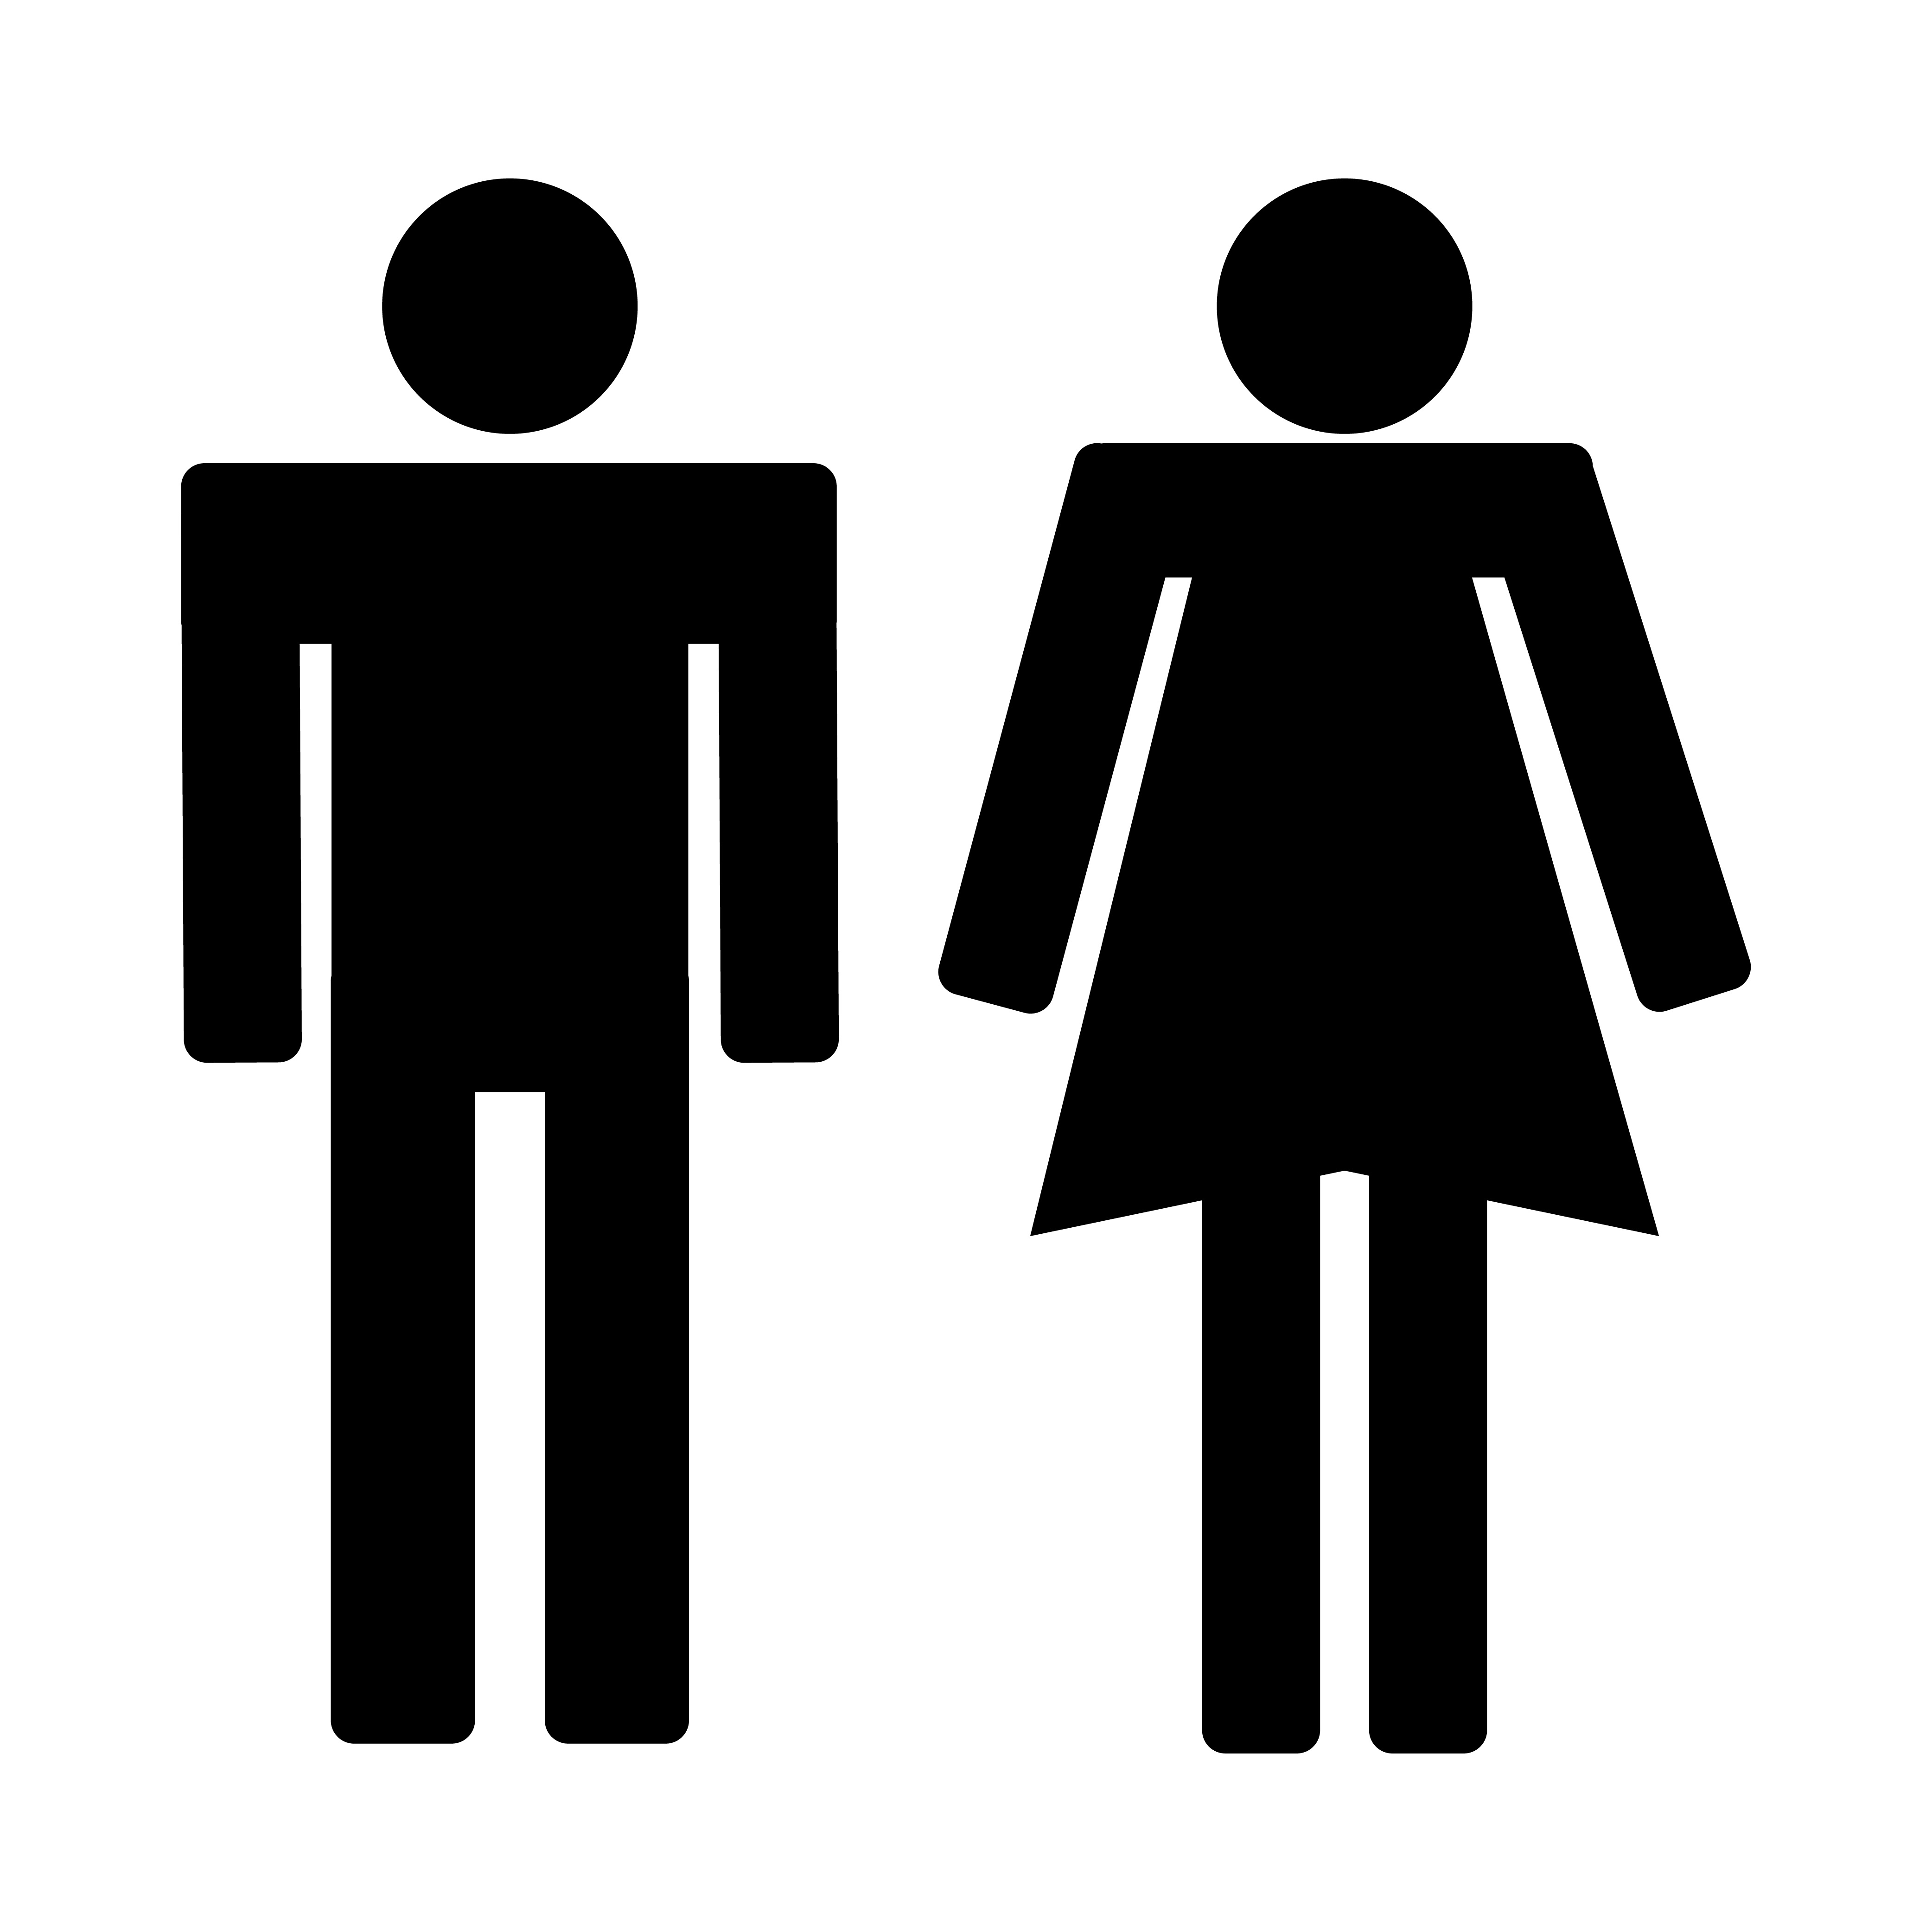 Woman and man symbols free image download